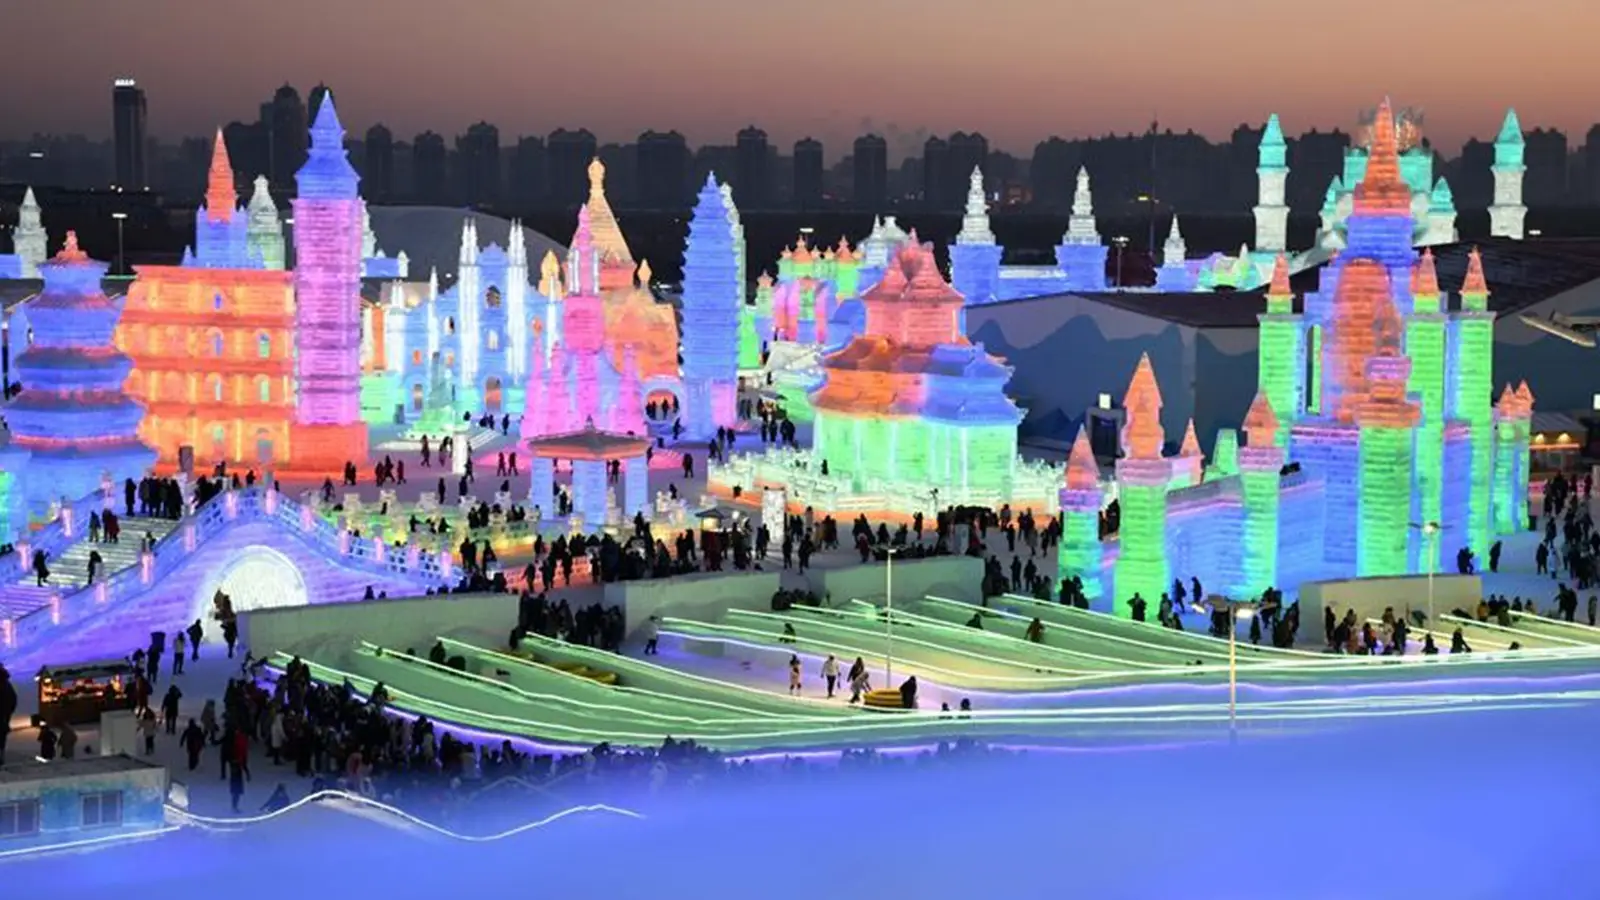 Illuminated ice sculptures at Harbin Ice and Snow Festival